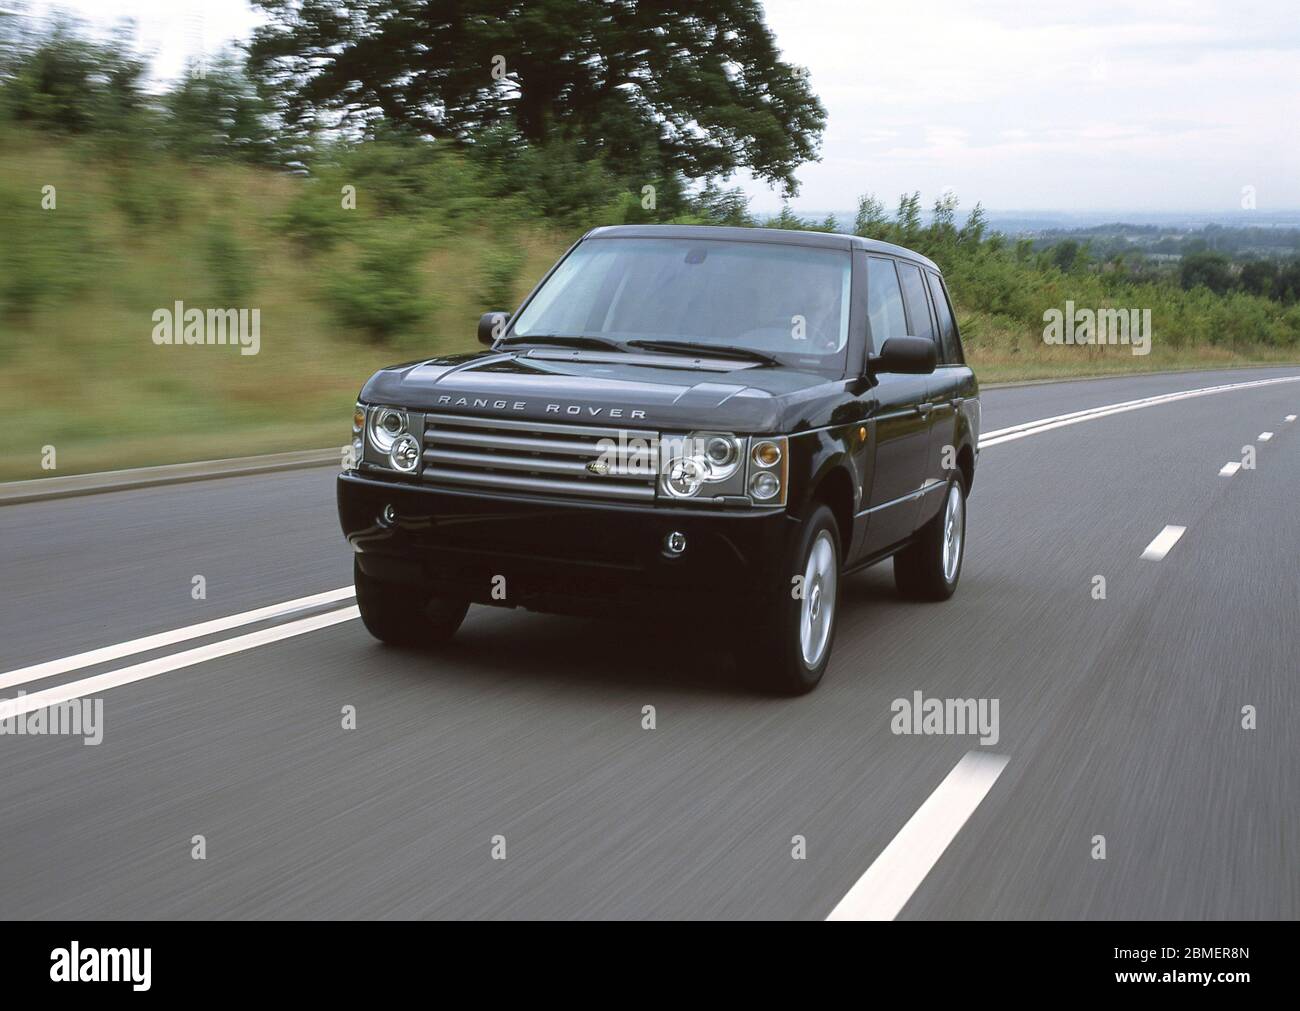 Range Rover Westminster 2003. Modello L322 Foto Stock